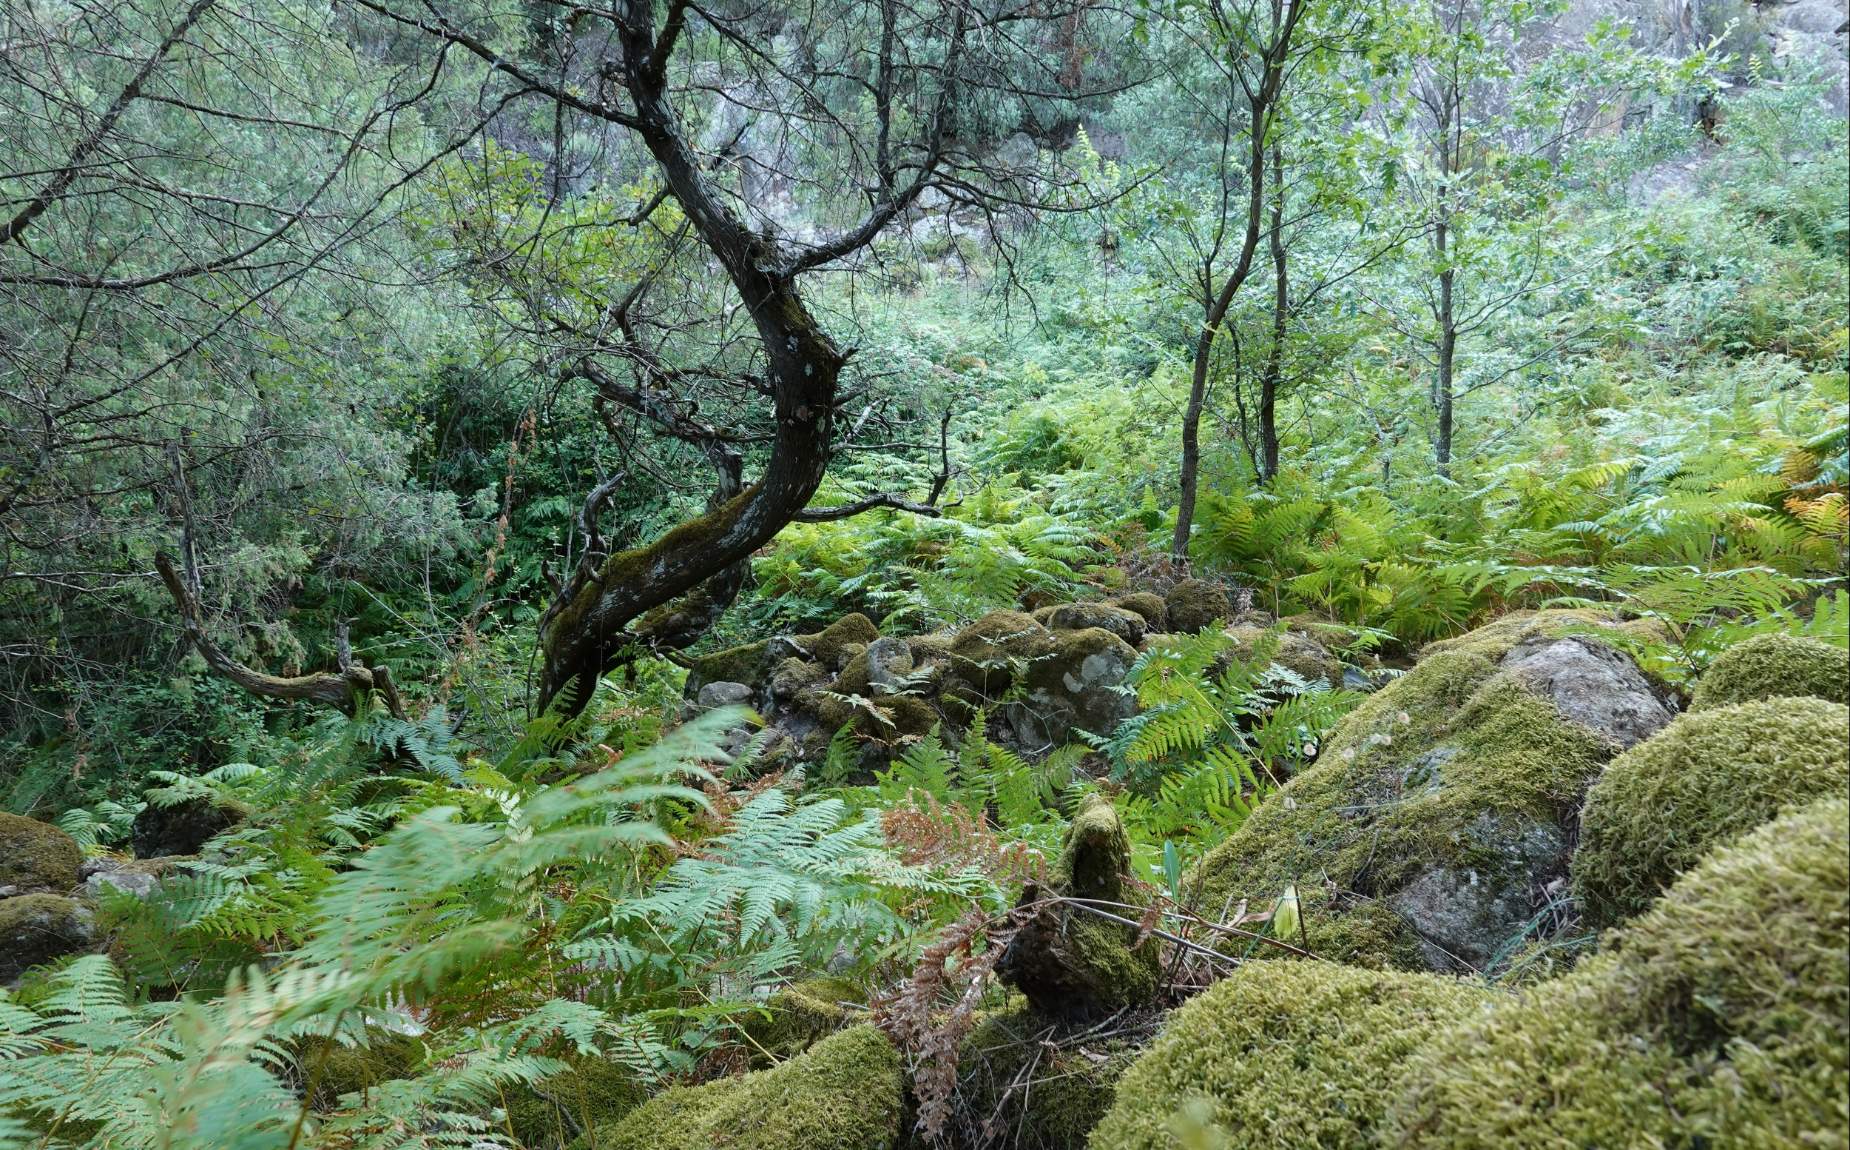 Inside a forest among the vegetation